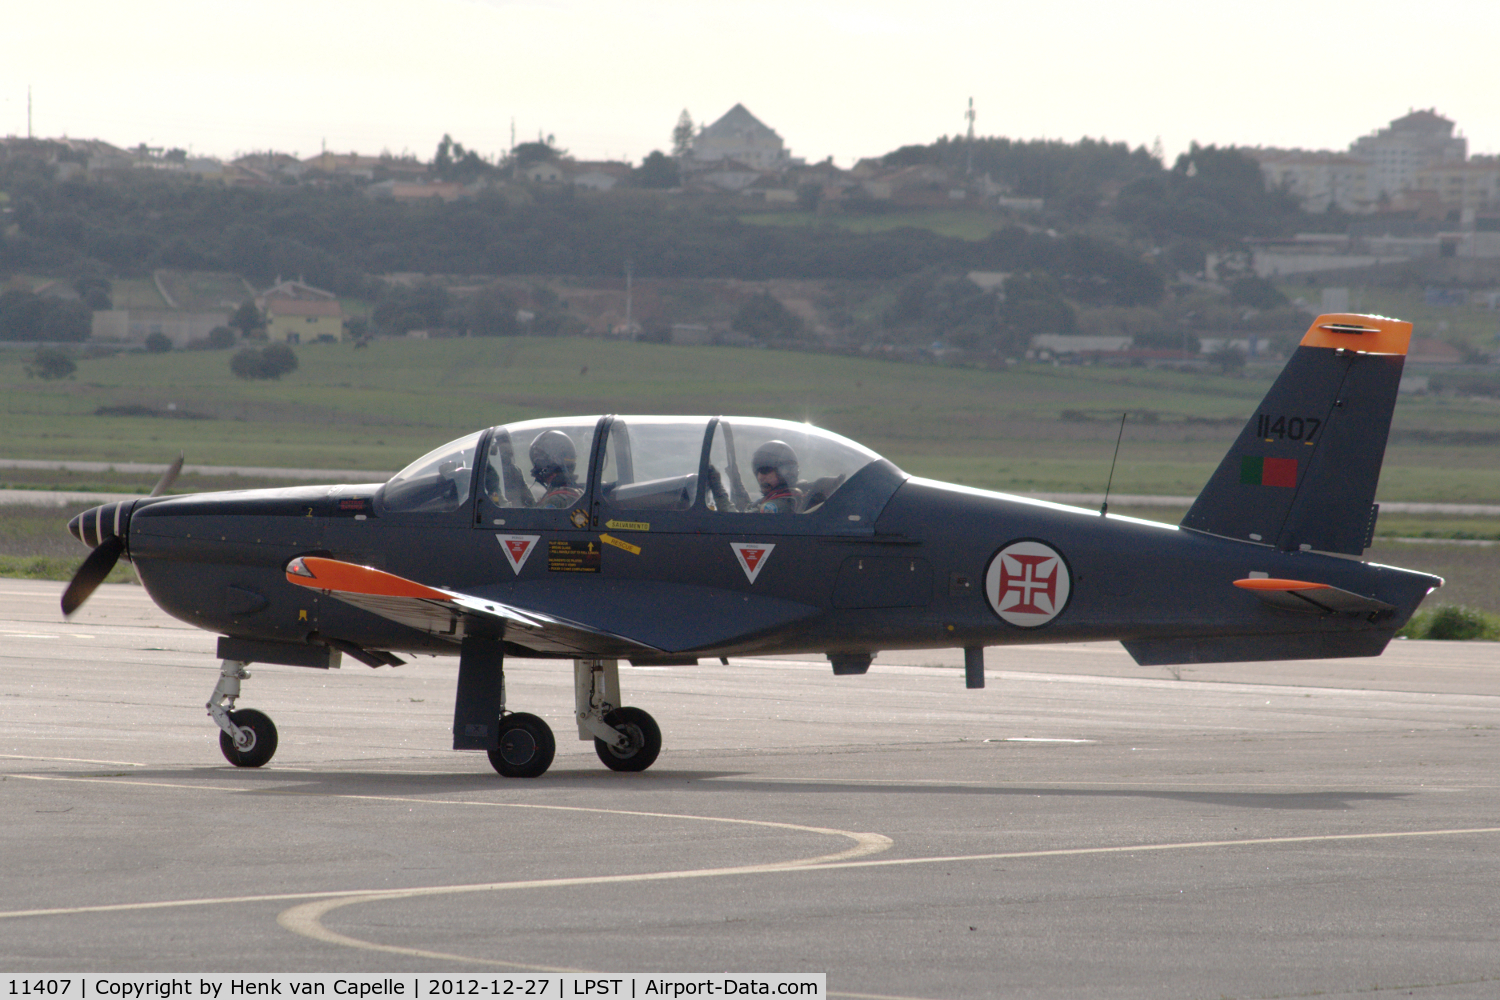 11407, Socata TB-30 Epsilon C/N 164, An Epsilon trainer of the Portuguese Air Force taxying at Sintra air force base.